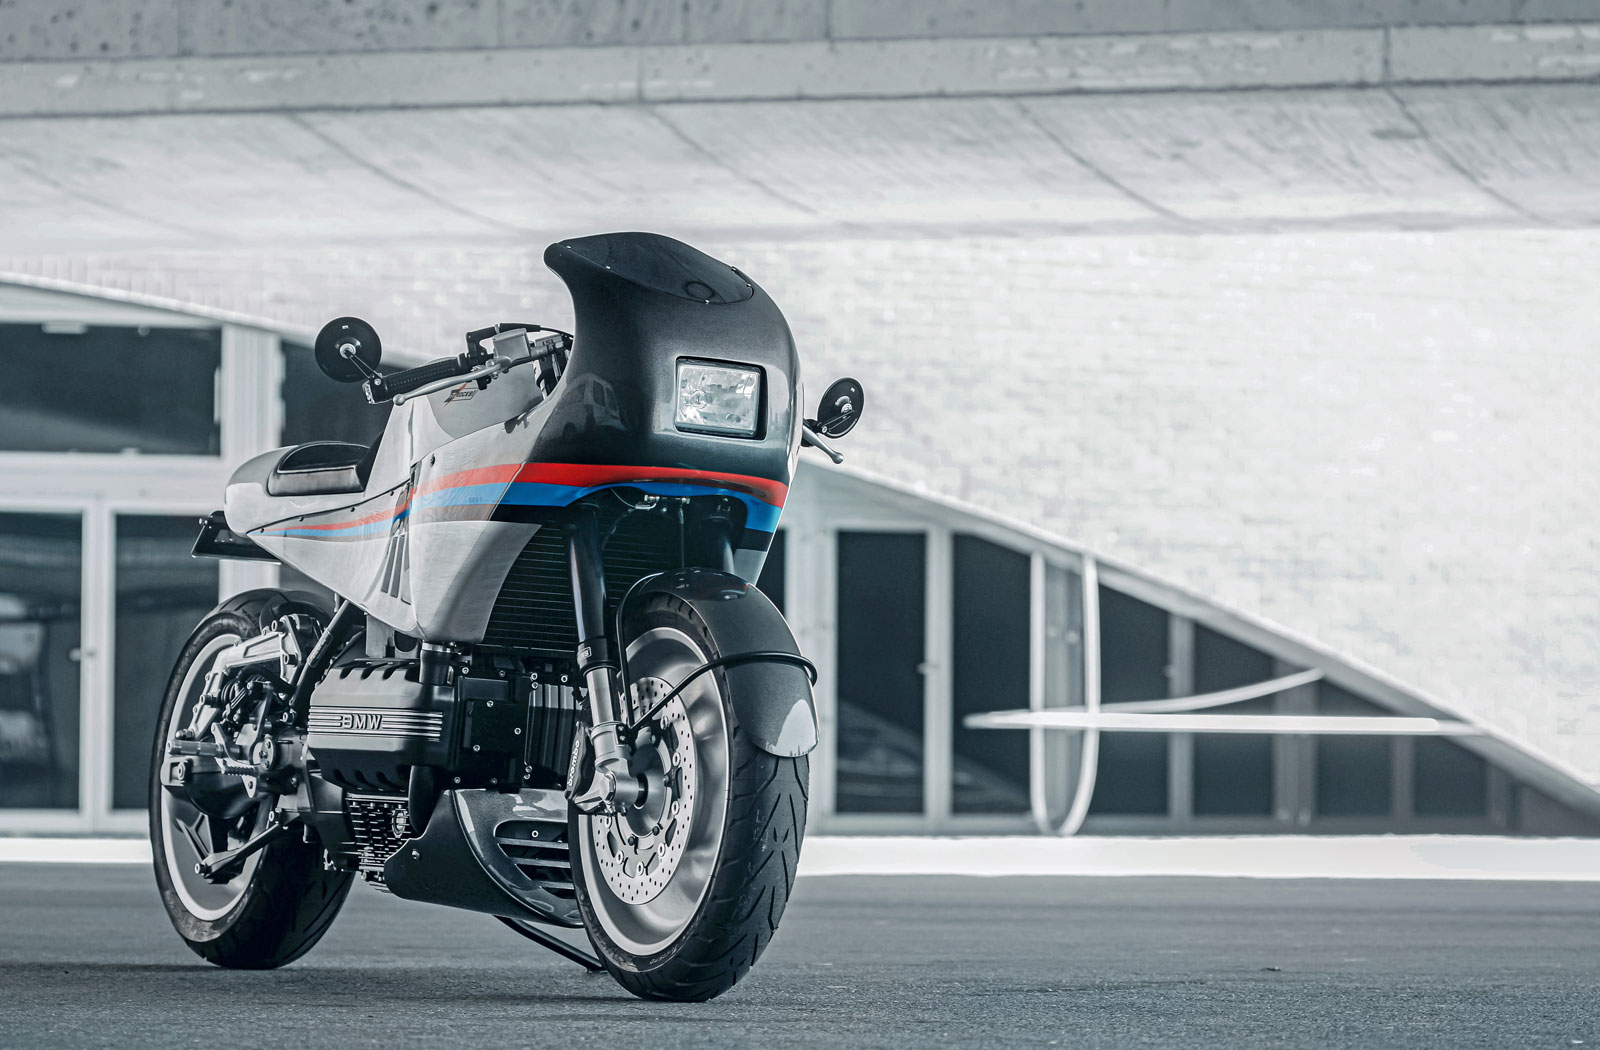 Love It or Hate It: It Rocks! Bikes BMW K1 'Limbo' - Return of the Cafe Racers